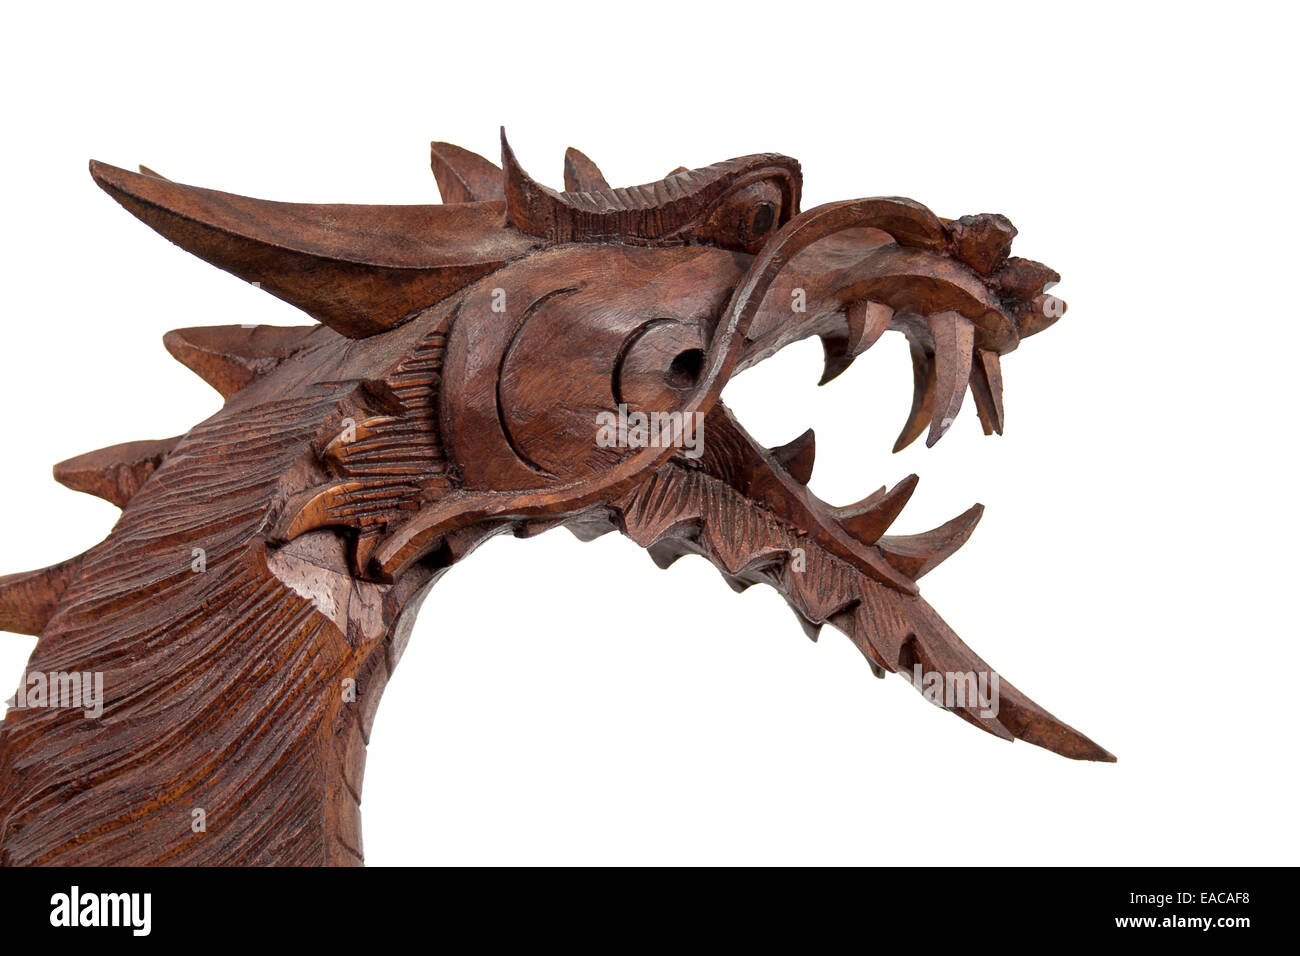 Wood carving dragon Stock Photo